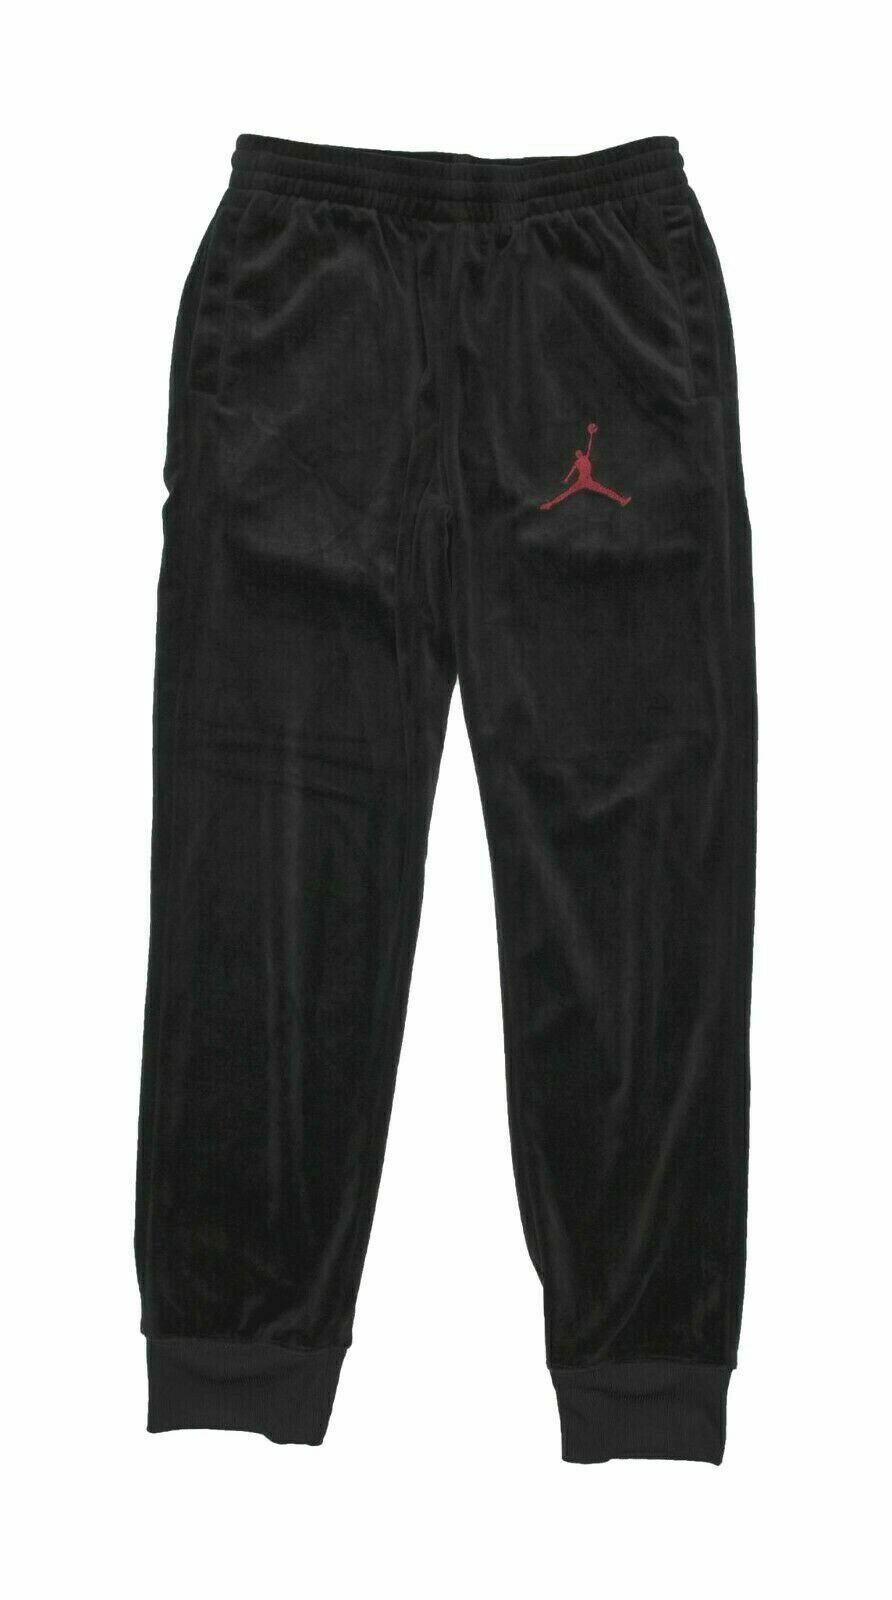 Air Jordan Velour Nike Big Kids Jogger Pants Black Red size  Large